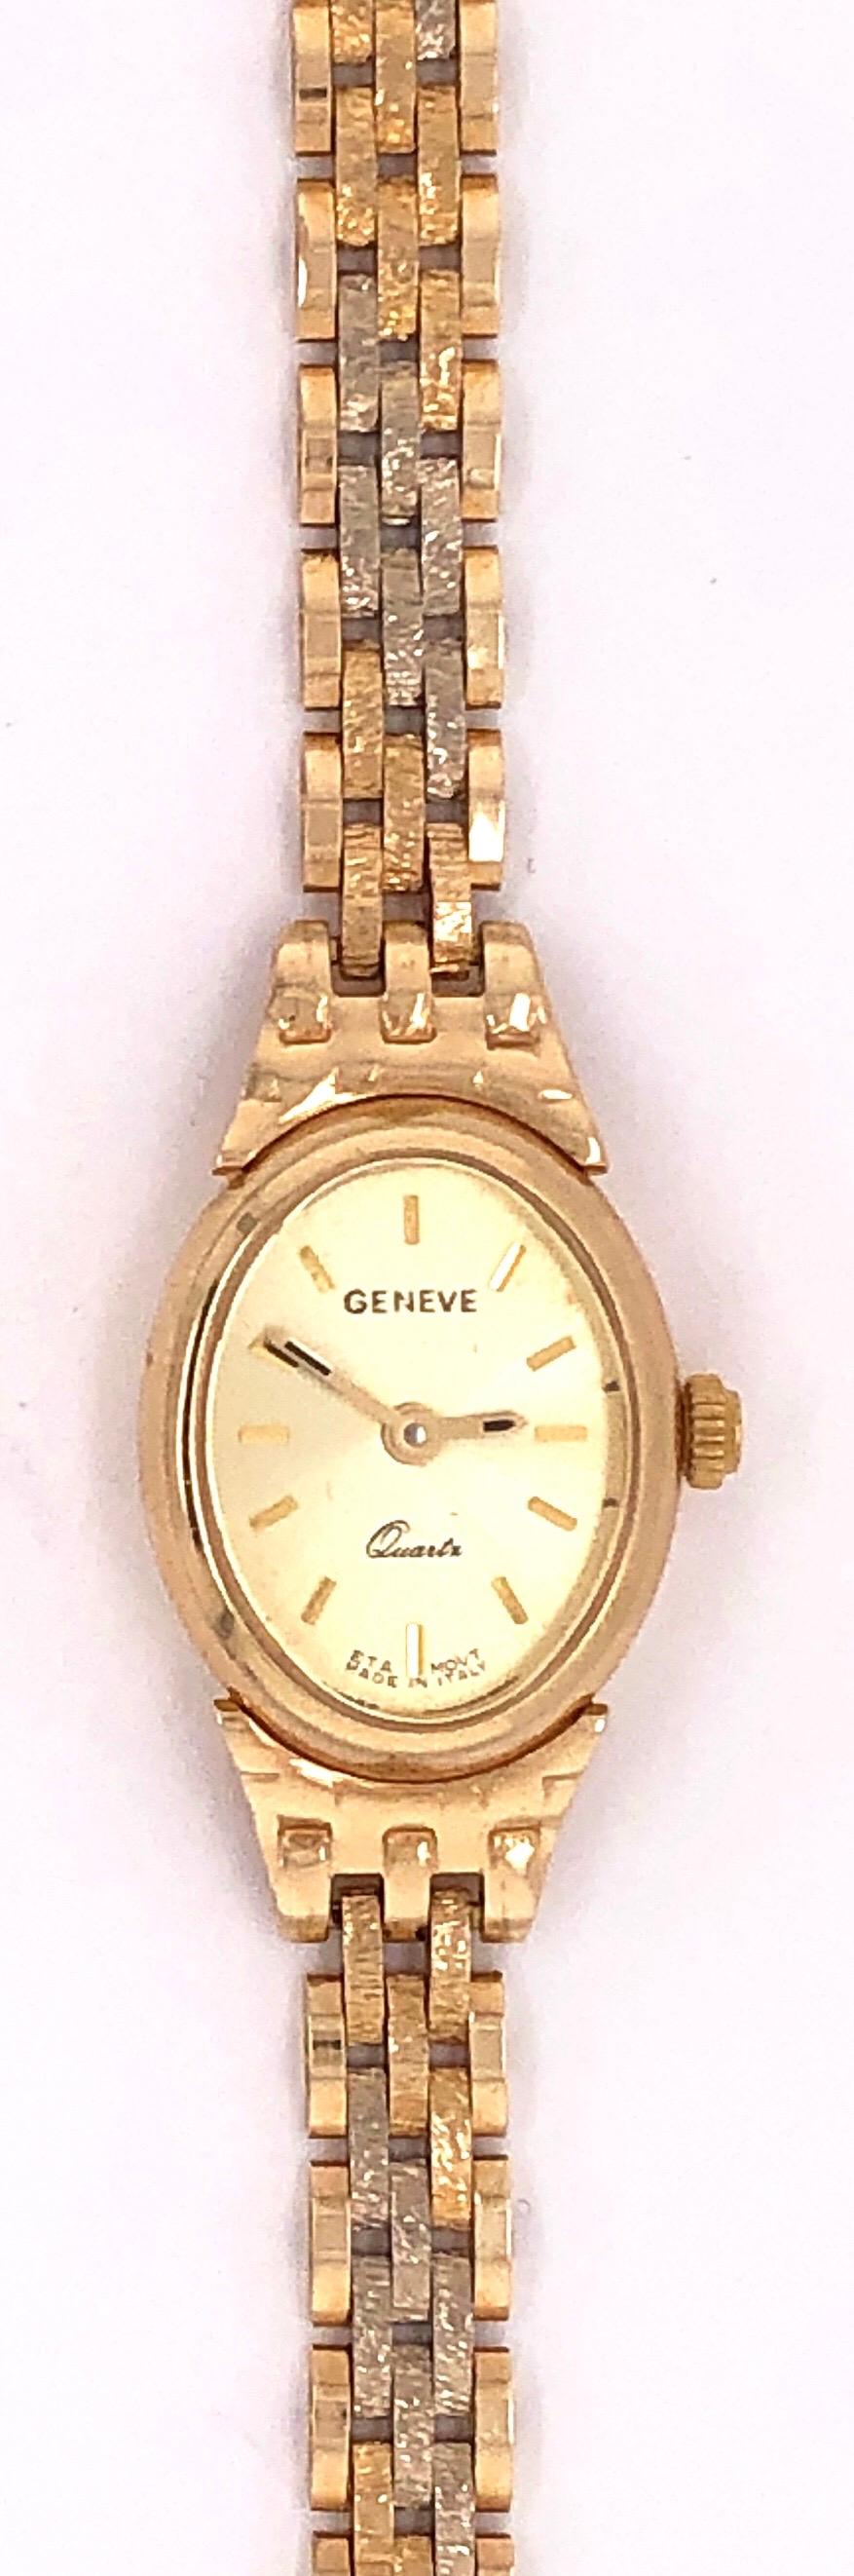 geneve quartz 14k gold watch price